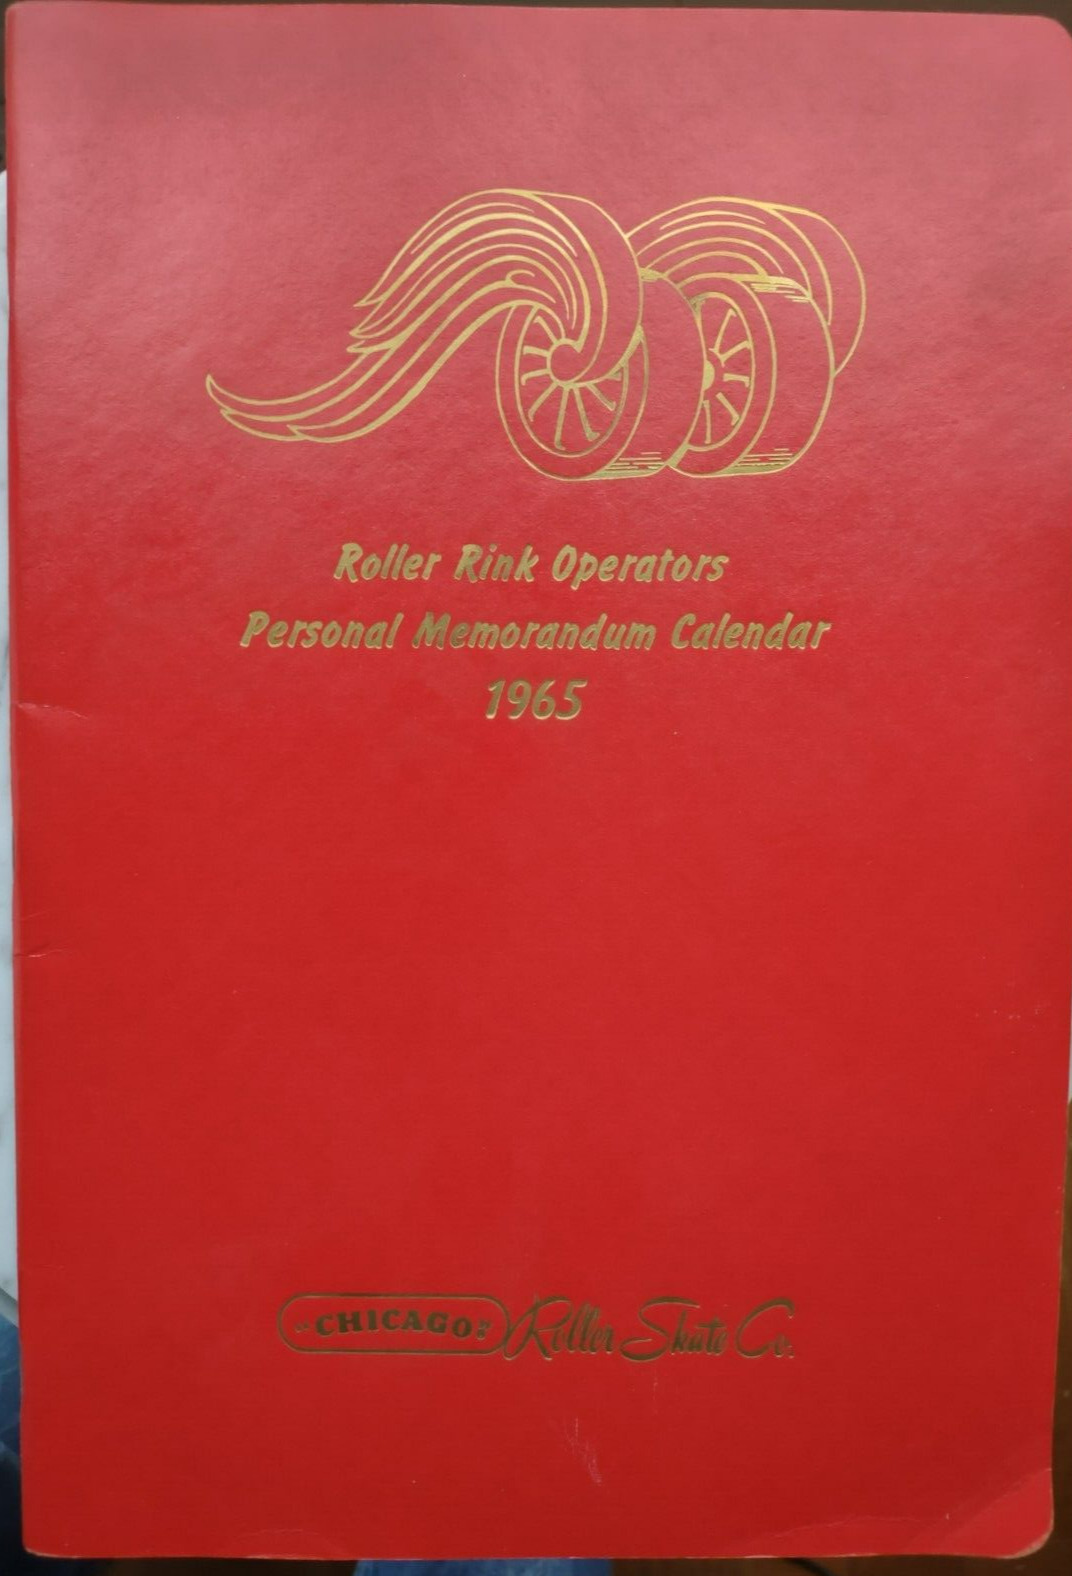 1965 Chicago Roller Skate Co Roller Rink Operators Personal Memorandum Calendar